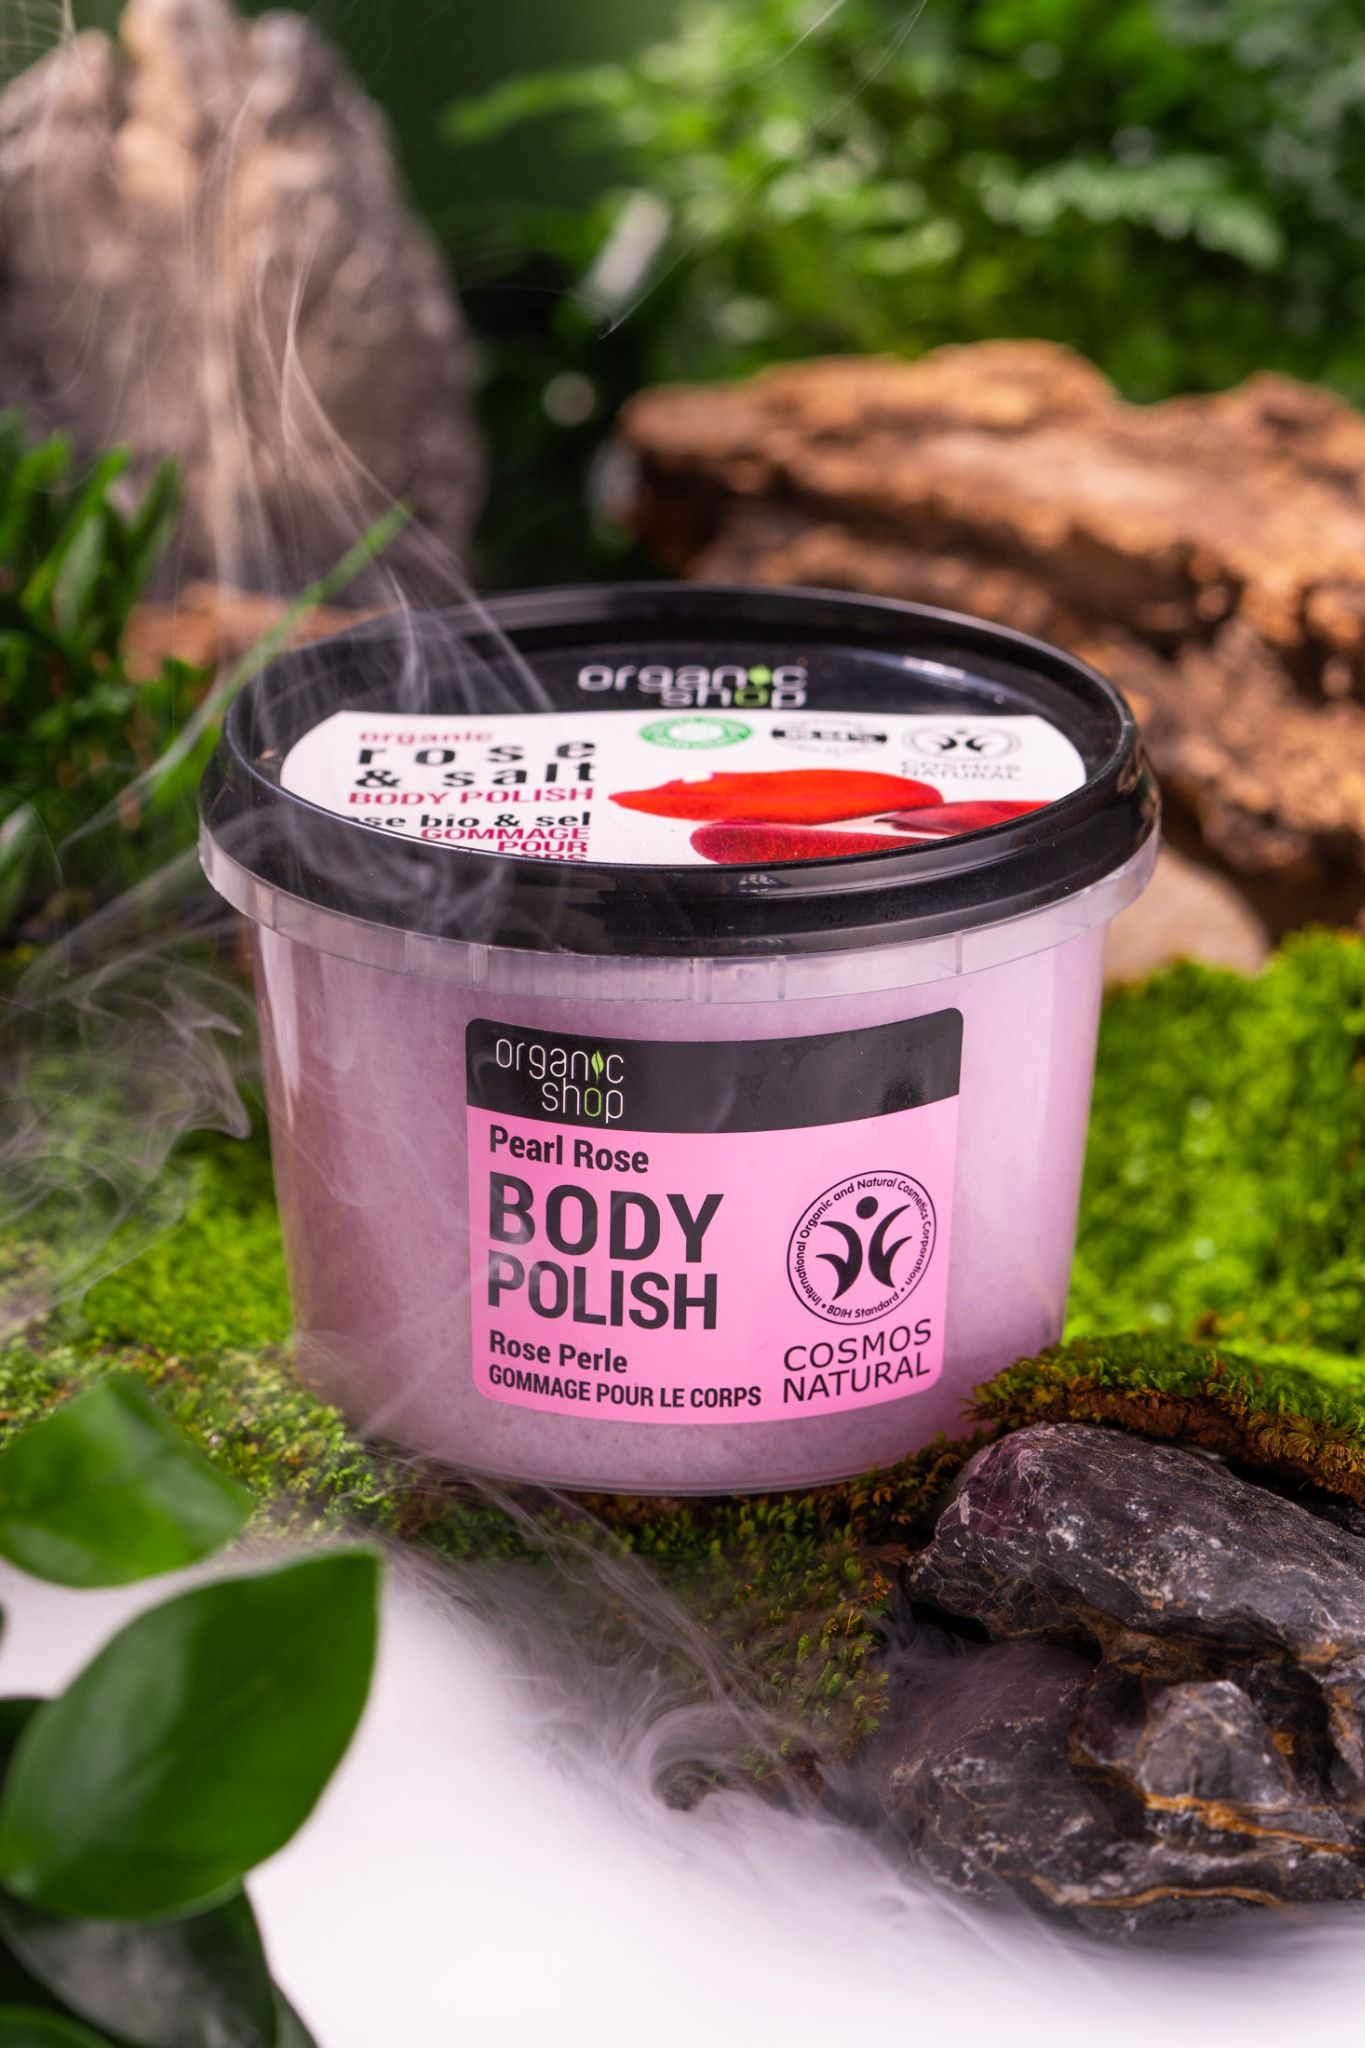  Organic Shop Body Polish Pearl Rose 